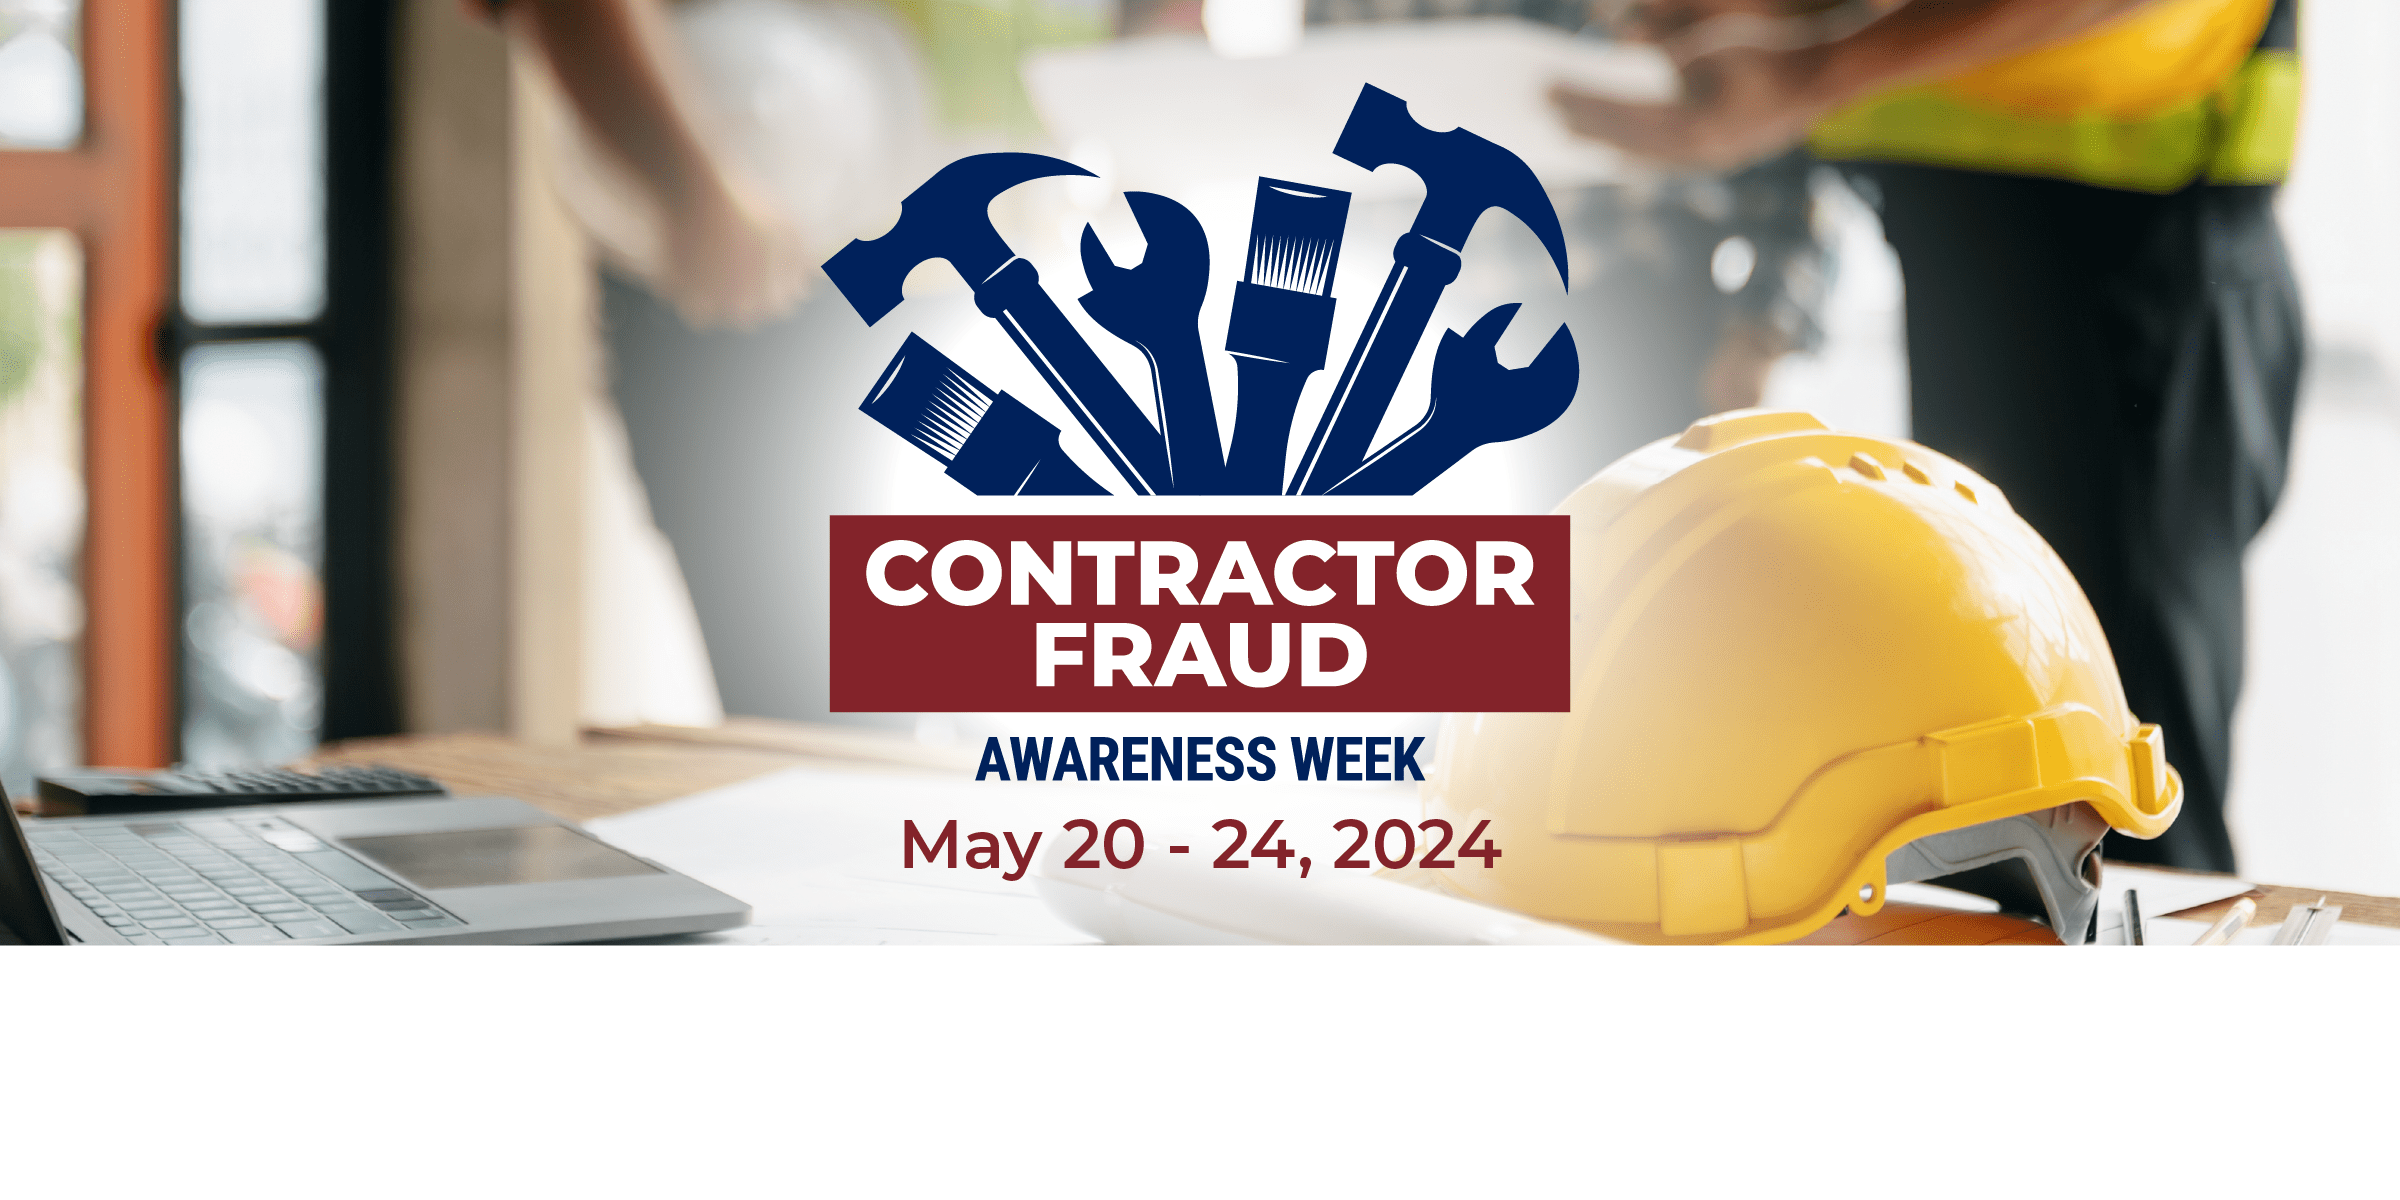 Contractor Fraud Awareness Week May 20 - 24, 2024